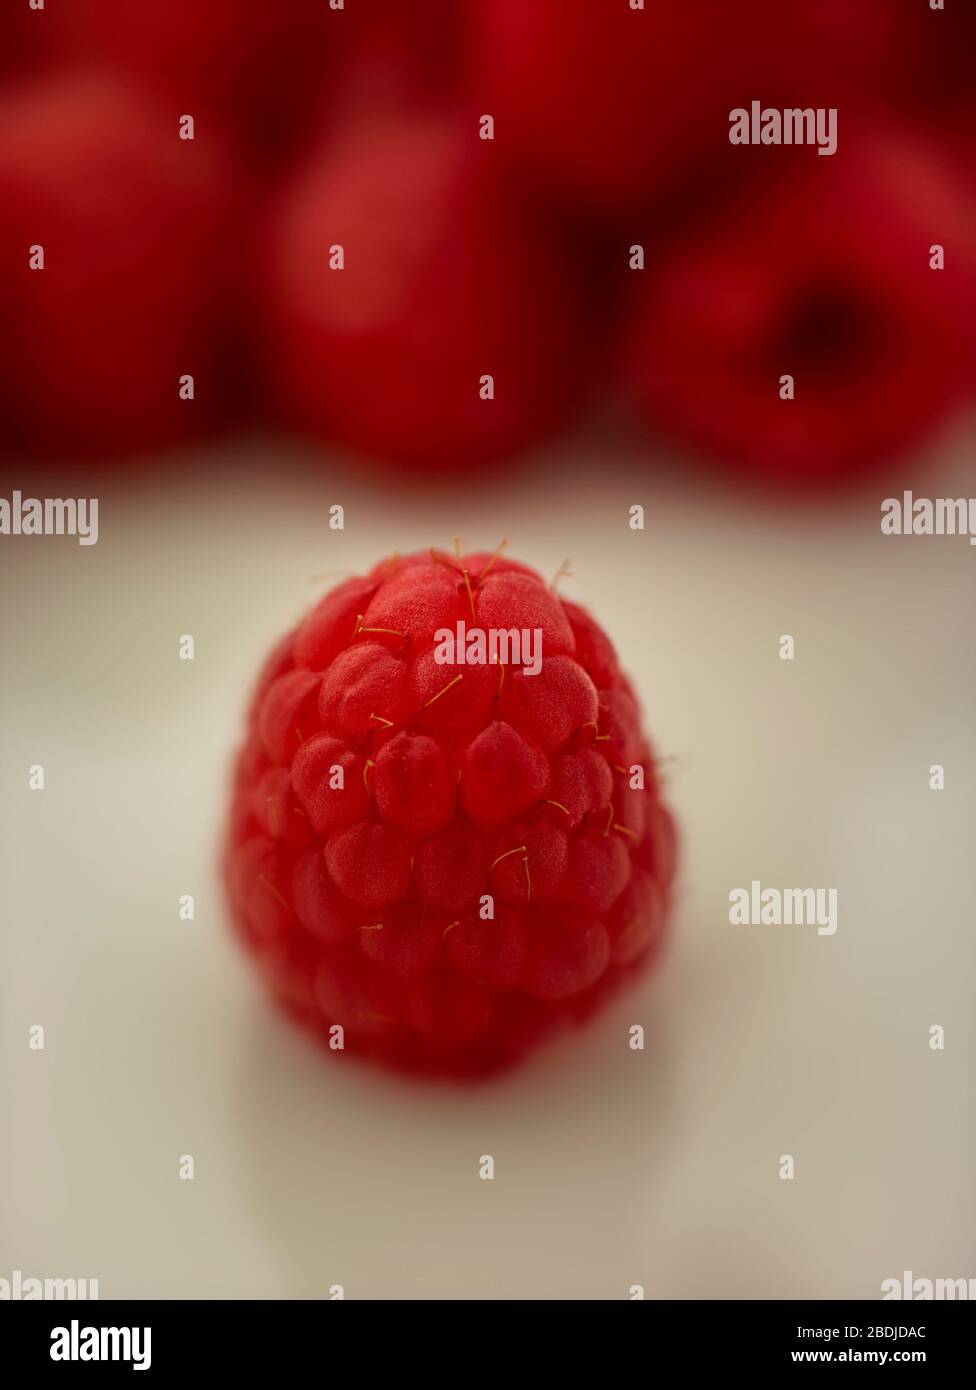 Raspberry fruit single and group food portrait on plain background Stock Photo